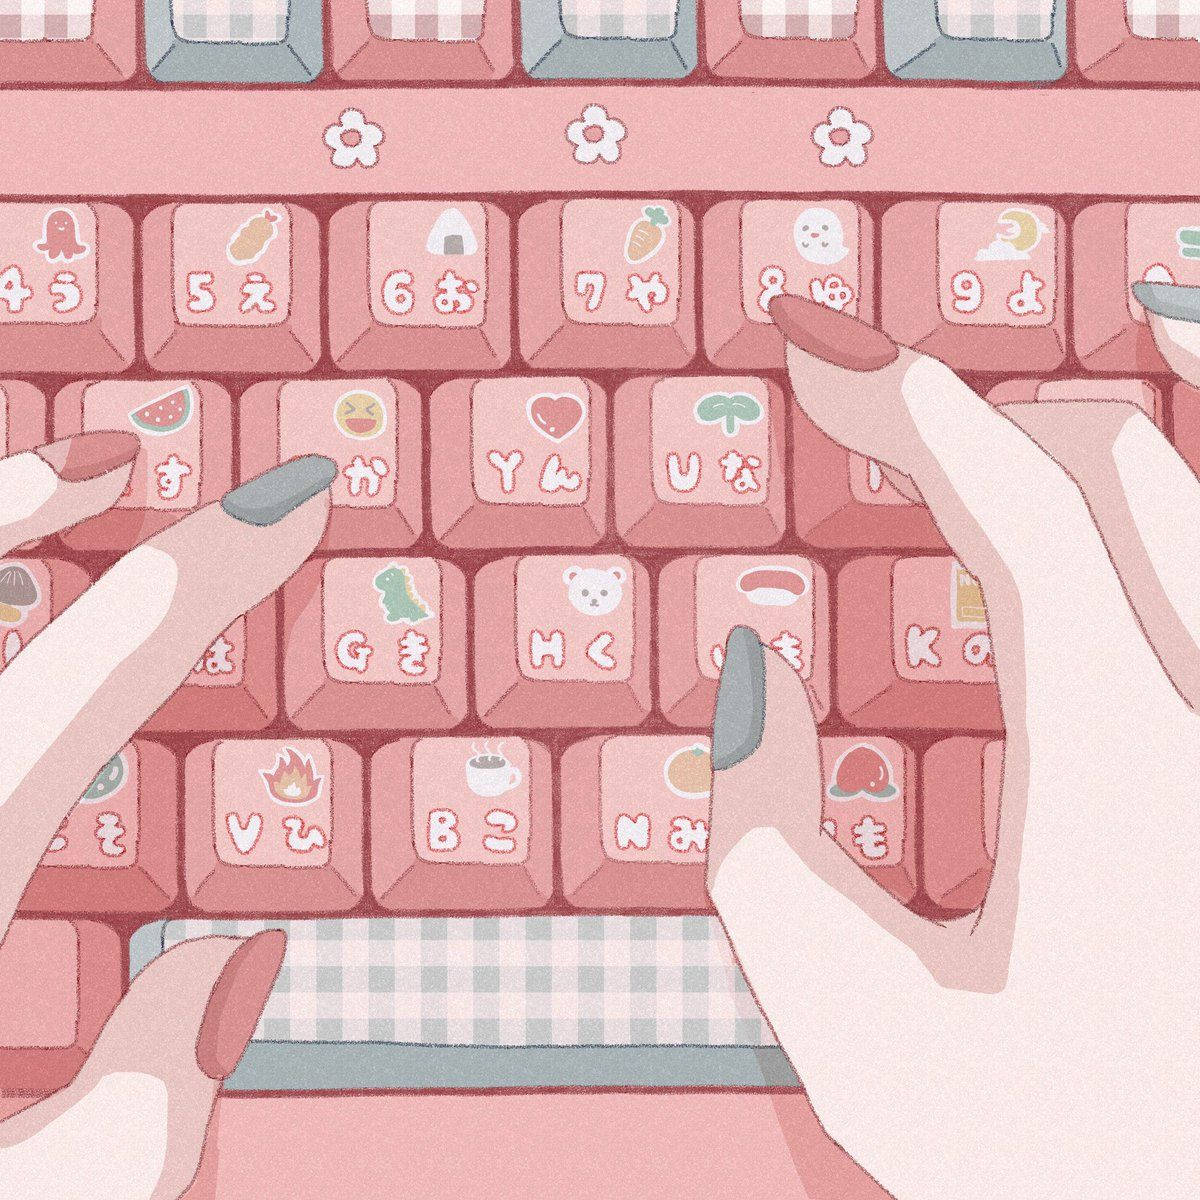 Pink Digital Art Keyboard Aesthetic Wallpaper